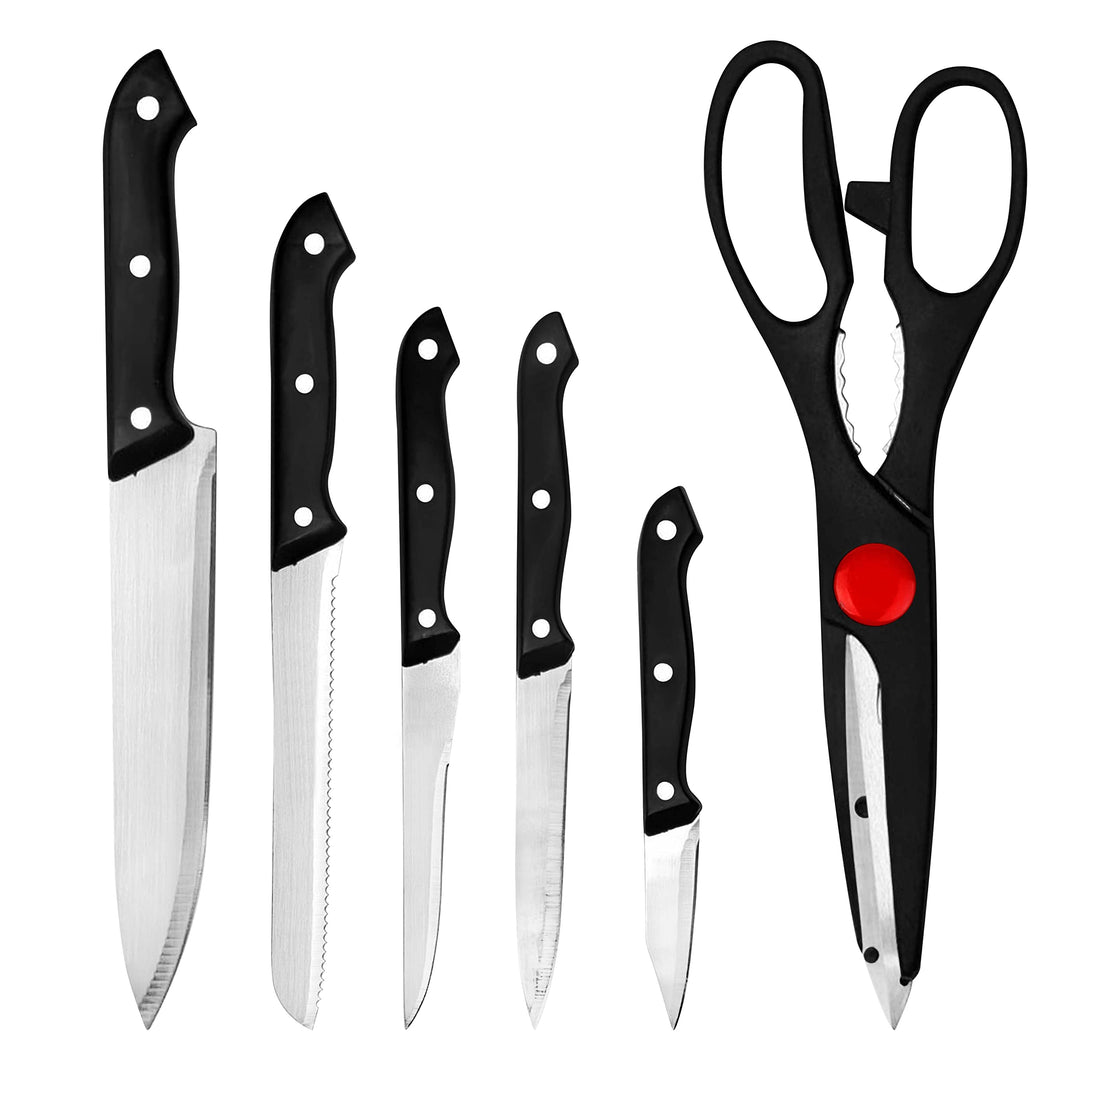 MALTYZE Knife Set with Block l Kitchen Knife Set l Kitchen Knives with Kitchen Scissors l Chef Knife Set l Knife Block with Knives |Stainless Steel Knife Set with Block